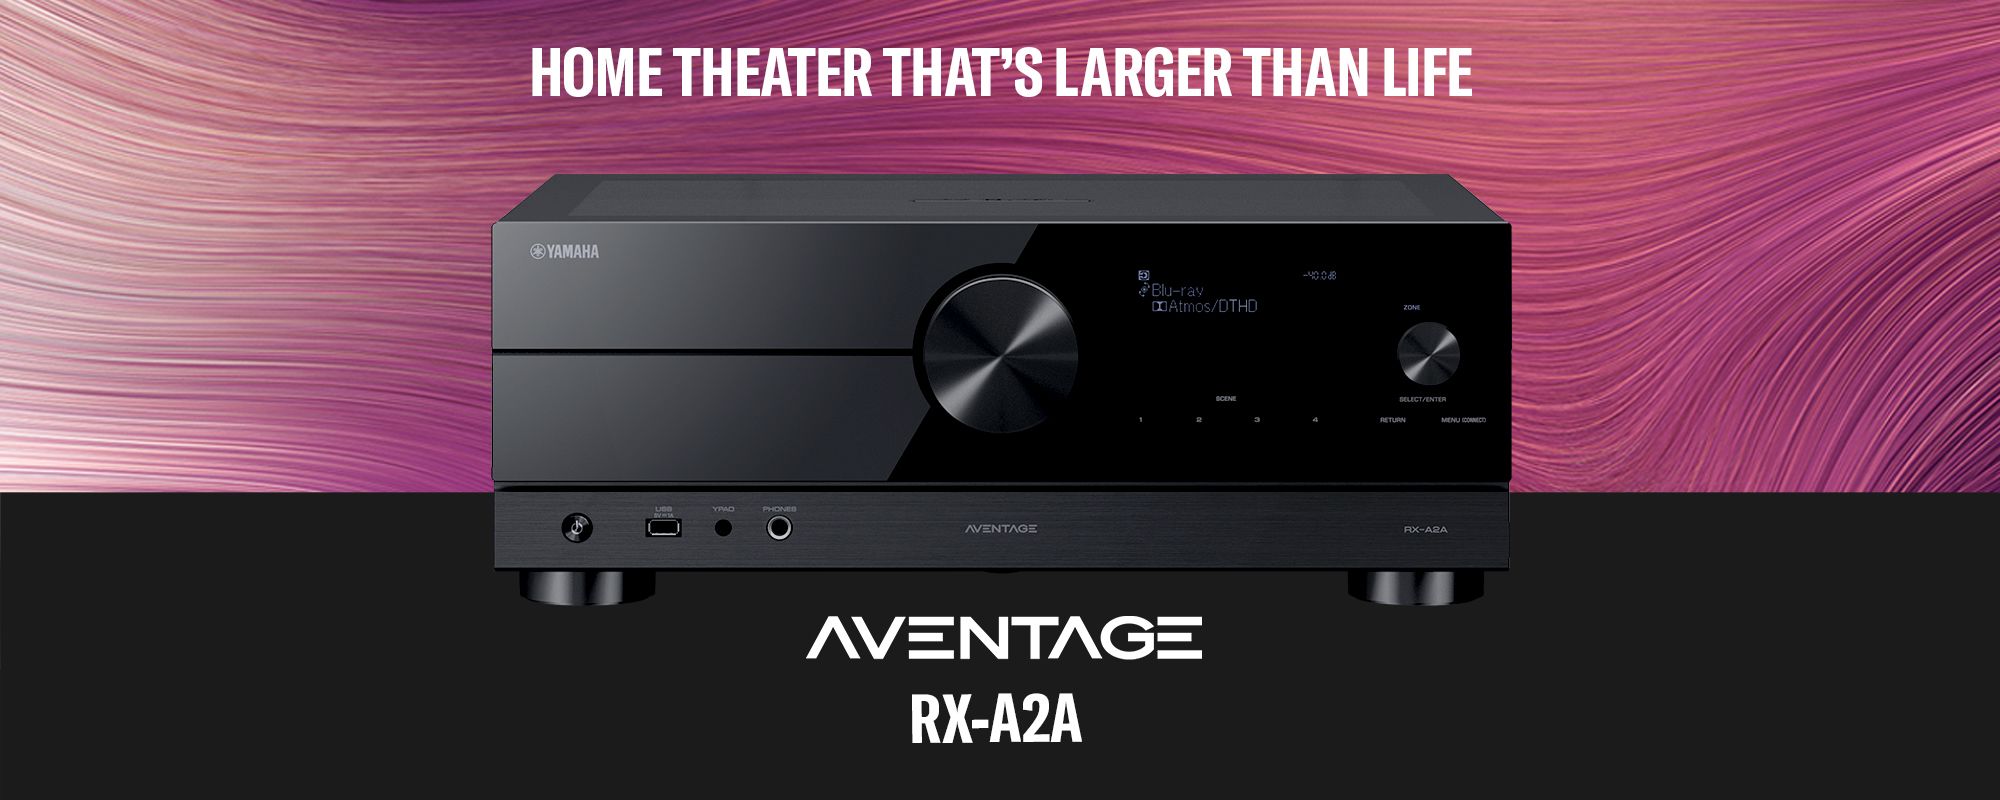 RX-A2A 7.2 Channel Dolby Atmos AV Receiver - Yamaha USA